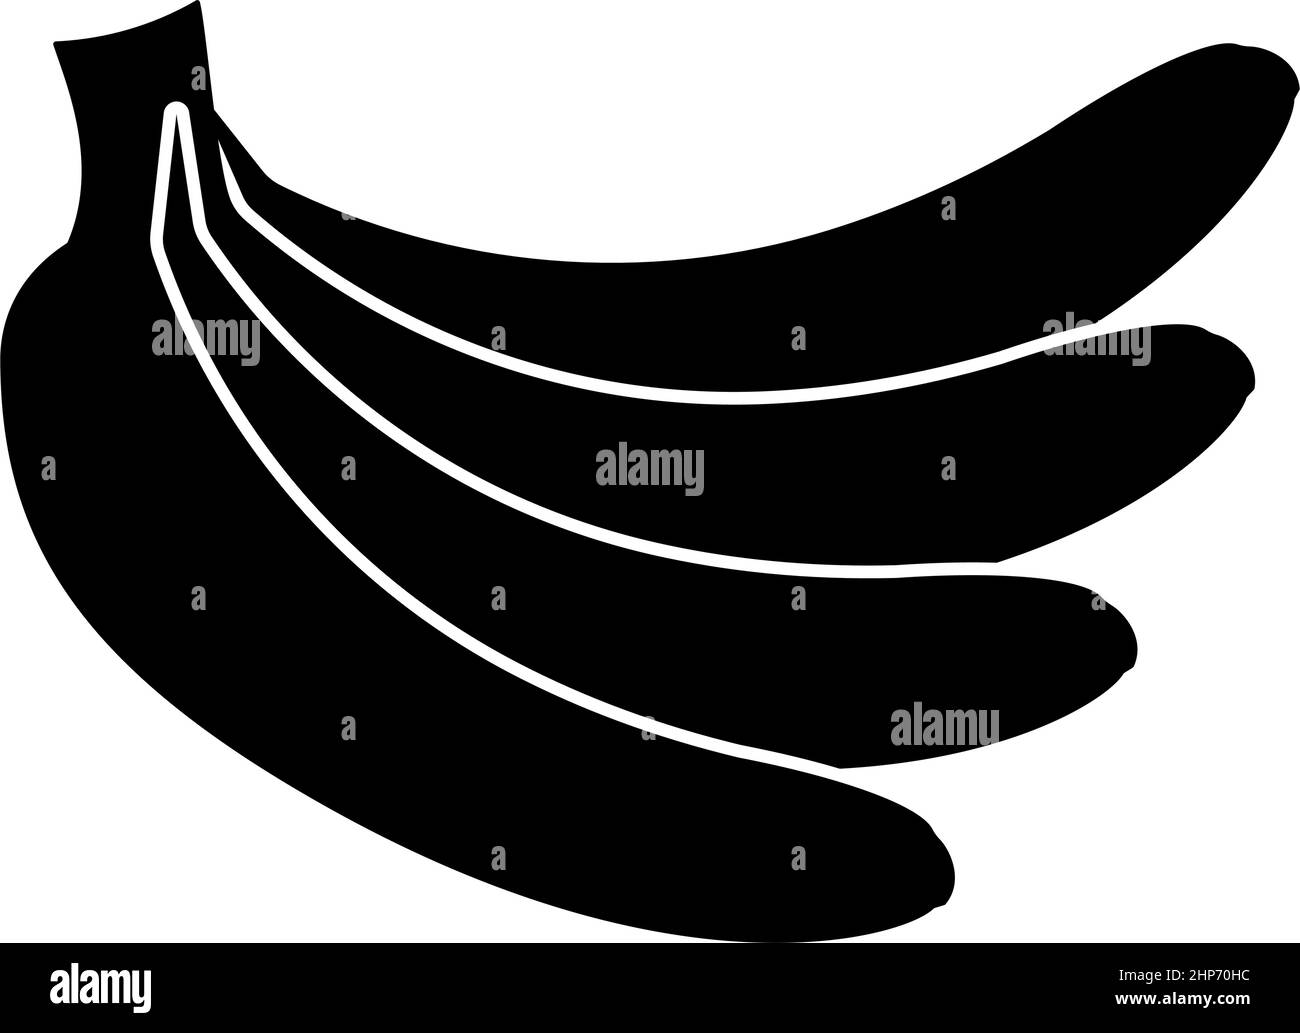 Haufen Bananen Symbol schwarze Farbe Vektor Illustration flache Stil Bild Stock Vektor